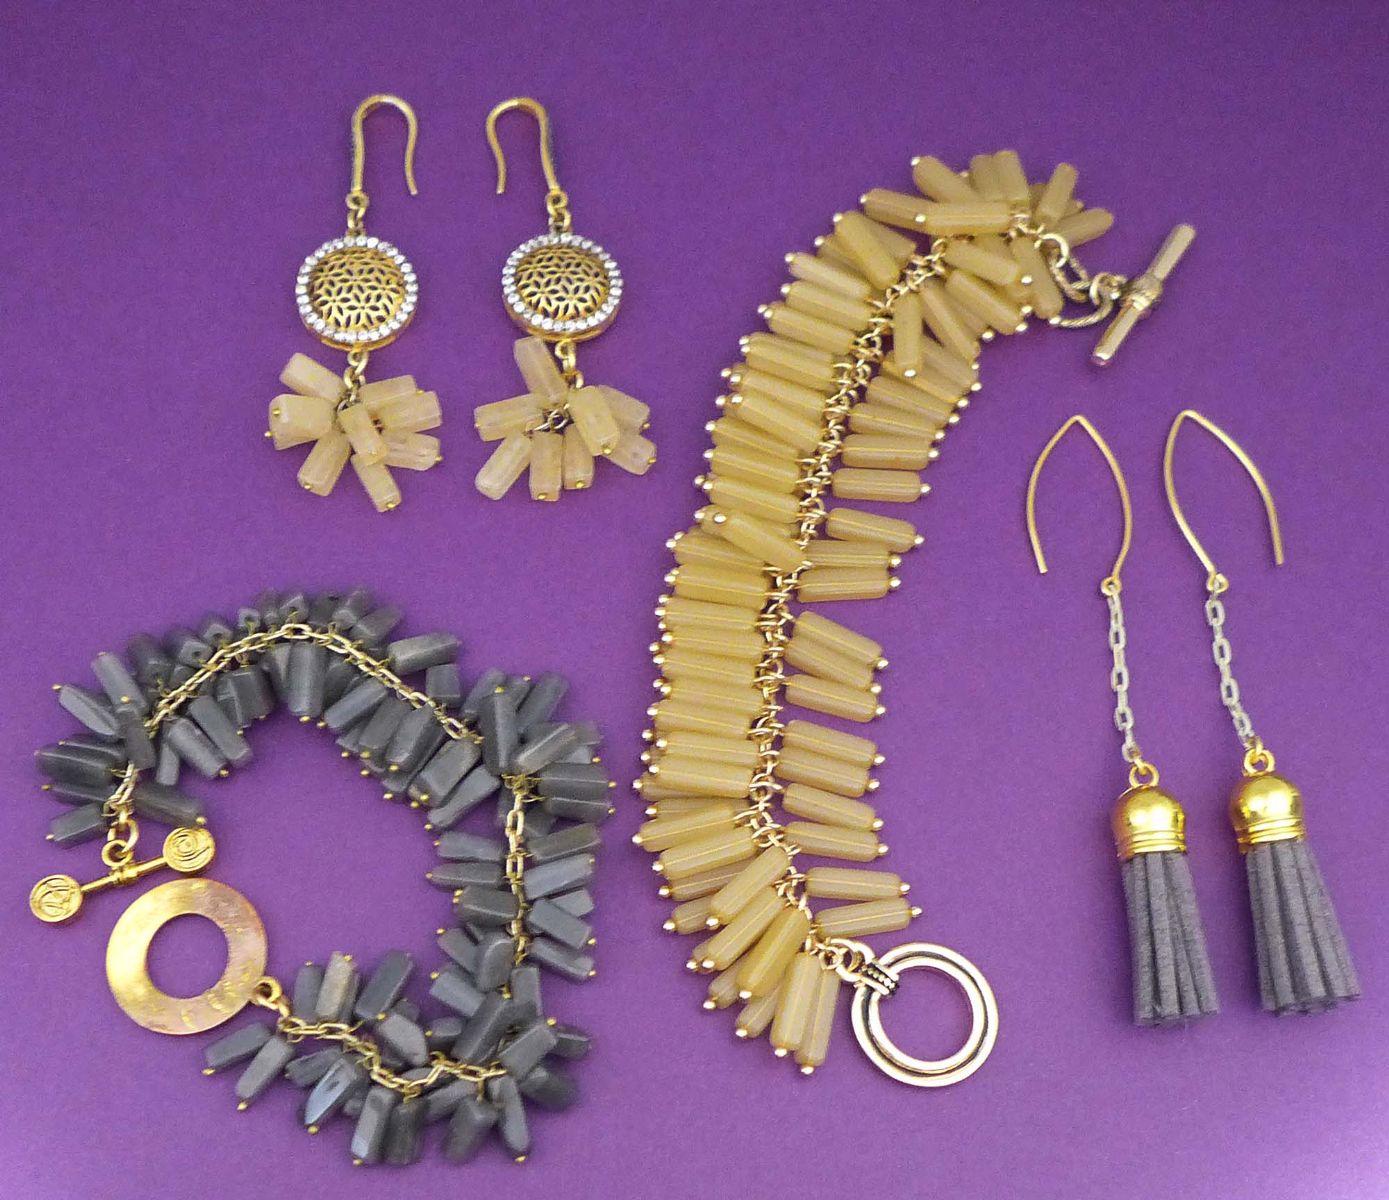 Spread of Jewelry made by Katy Richards